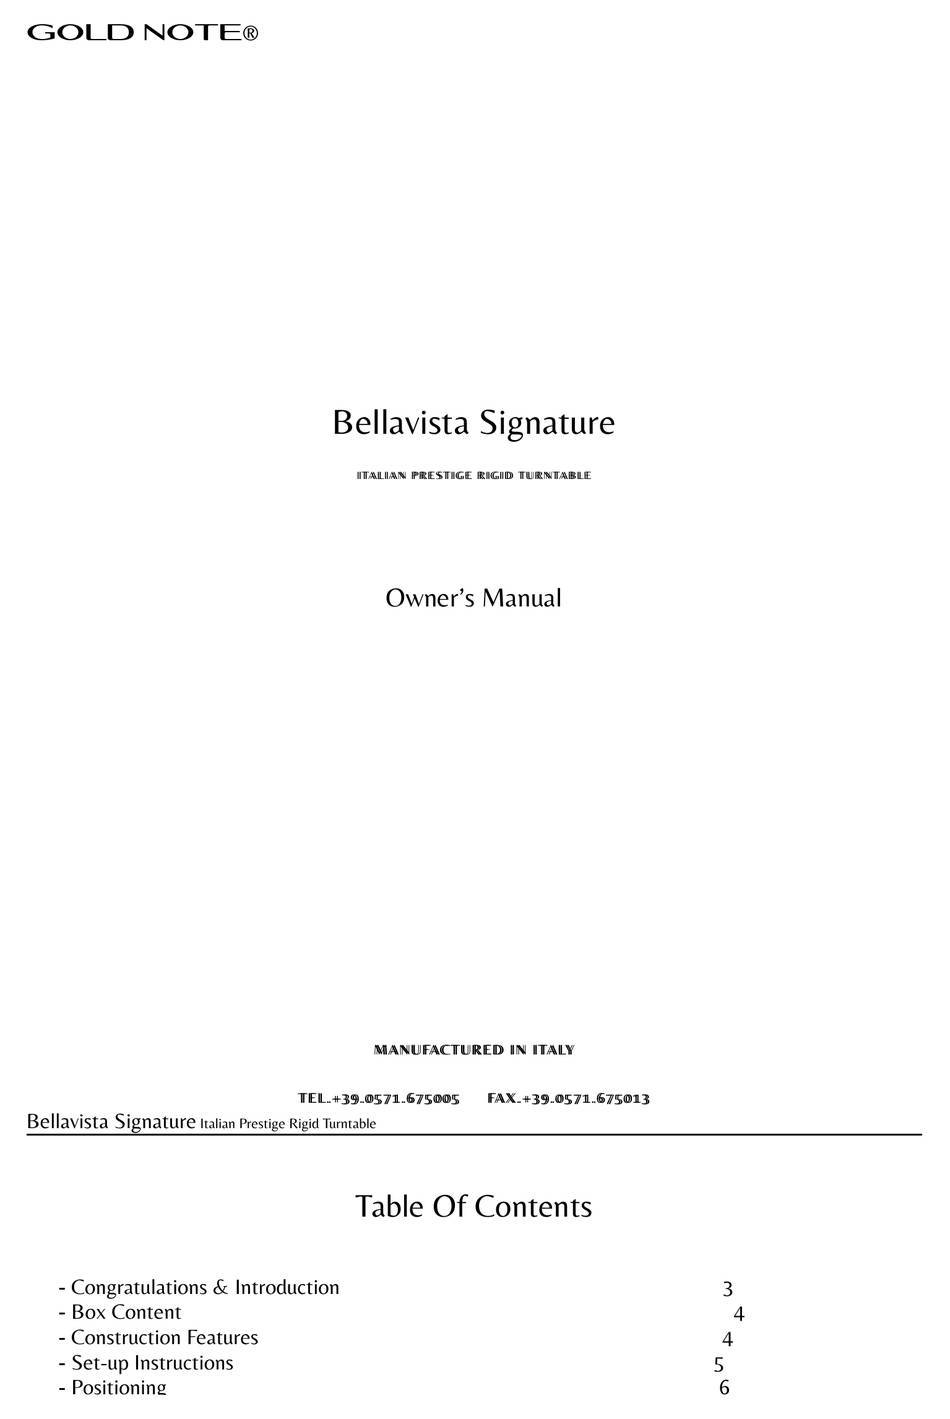 Gold Note Bellavista Signature